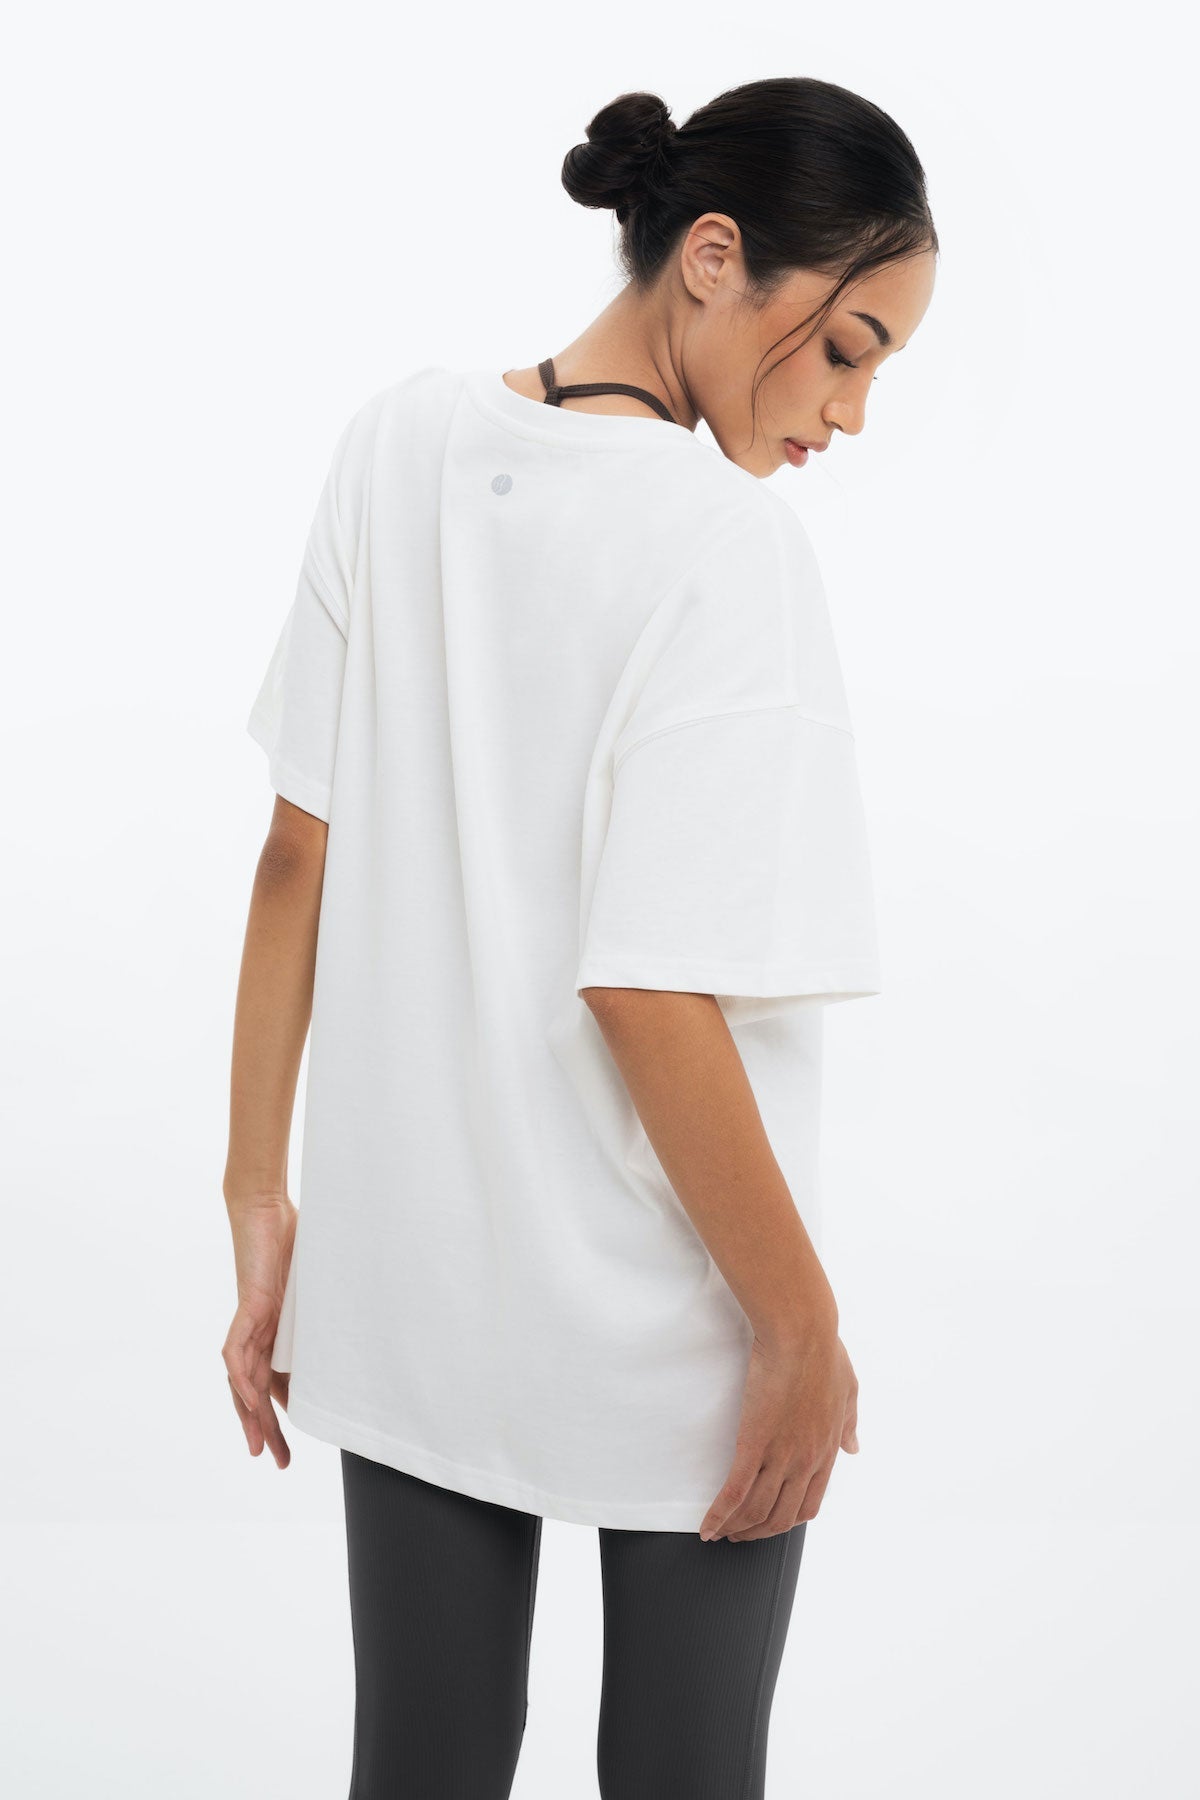 Flap T-Shirt in White (1M LEFT)